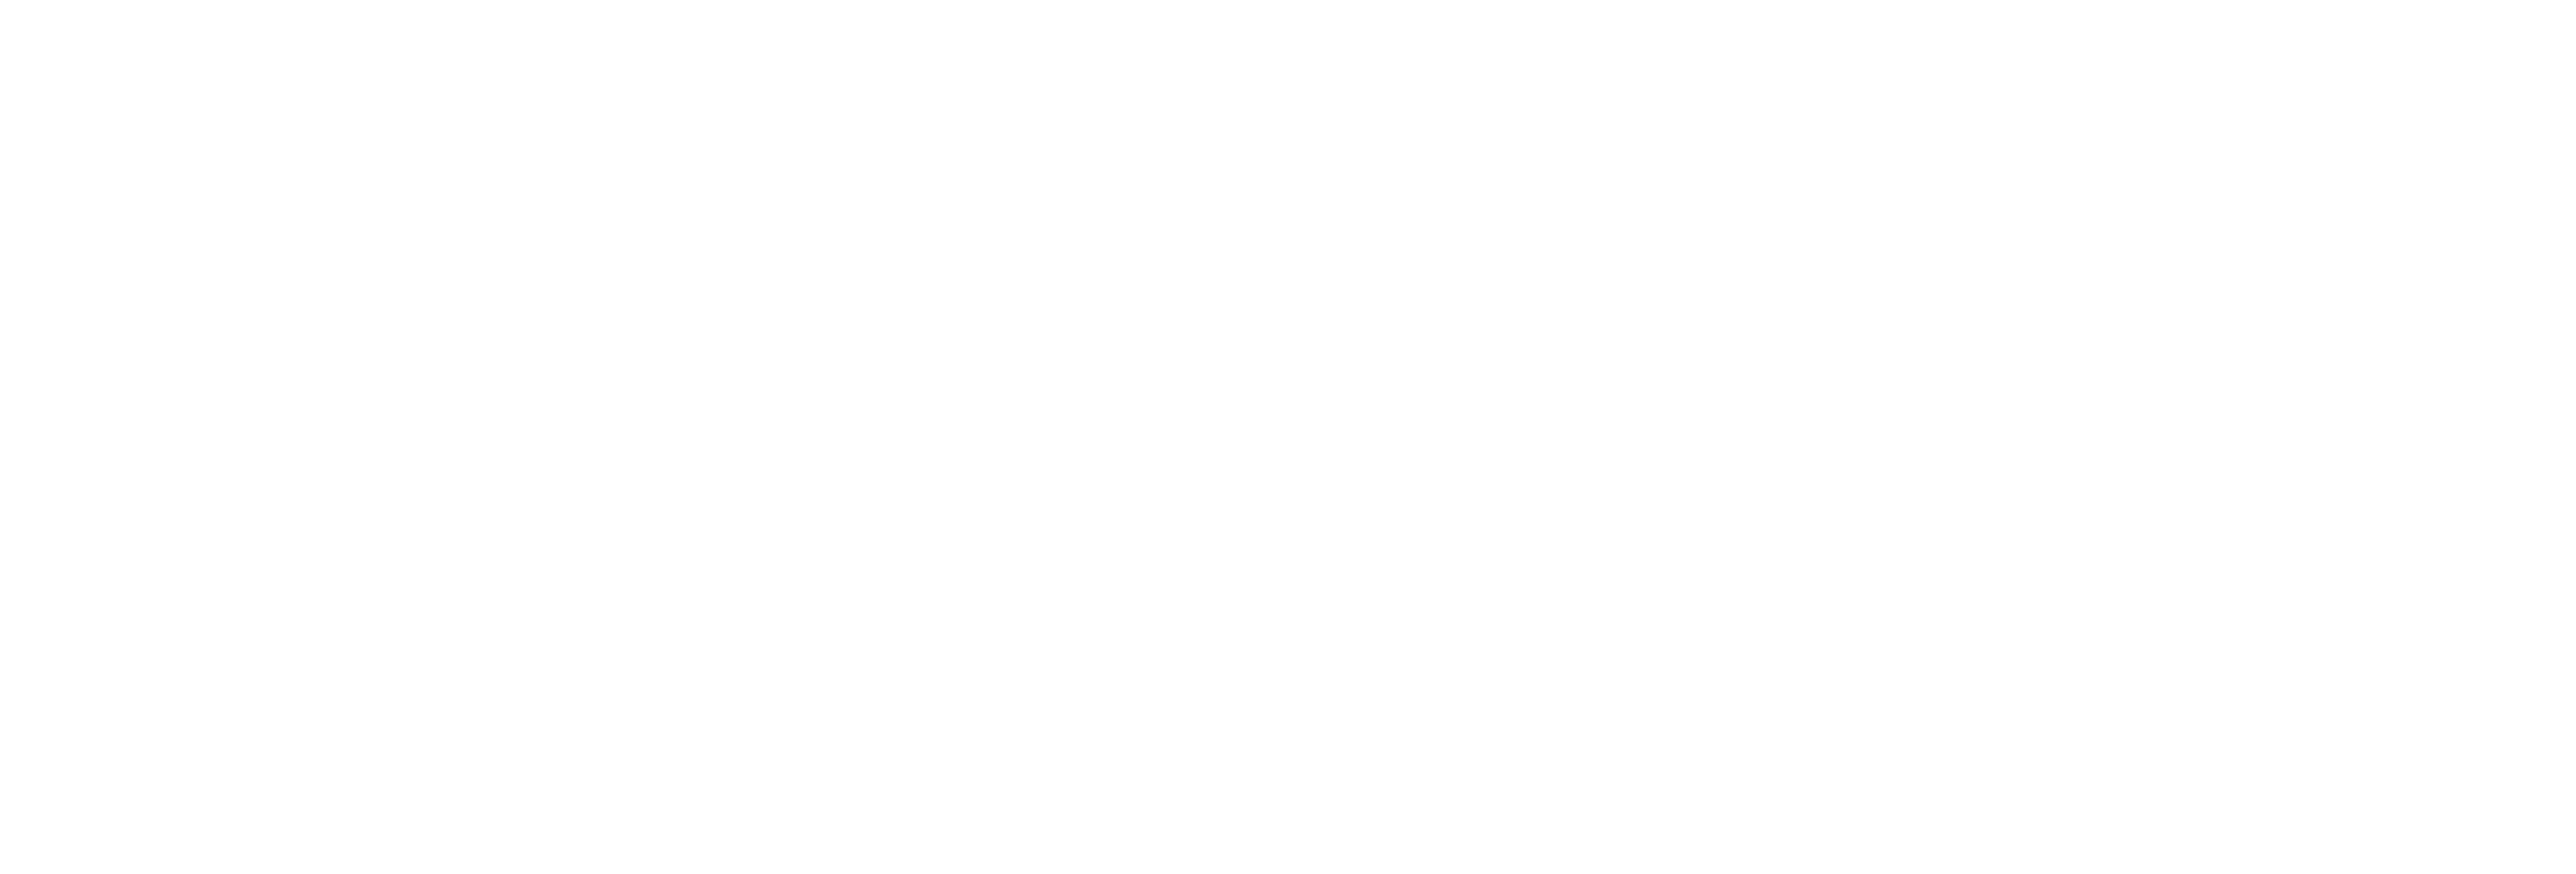 Ariston-arbic-logo-about-us